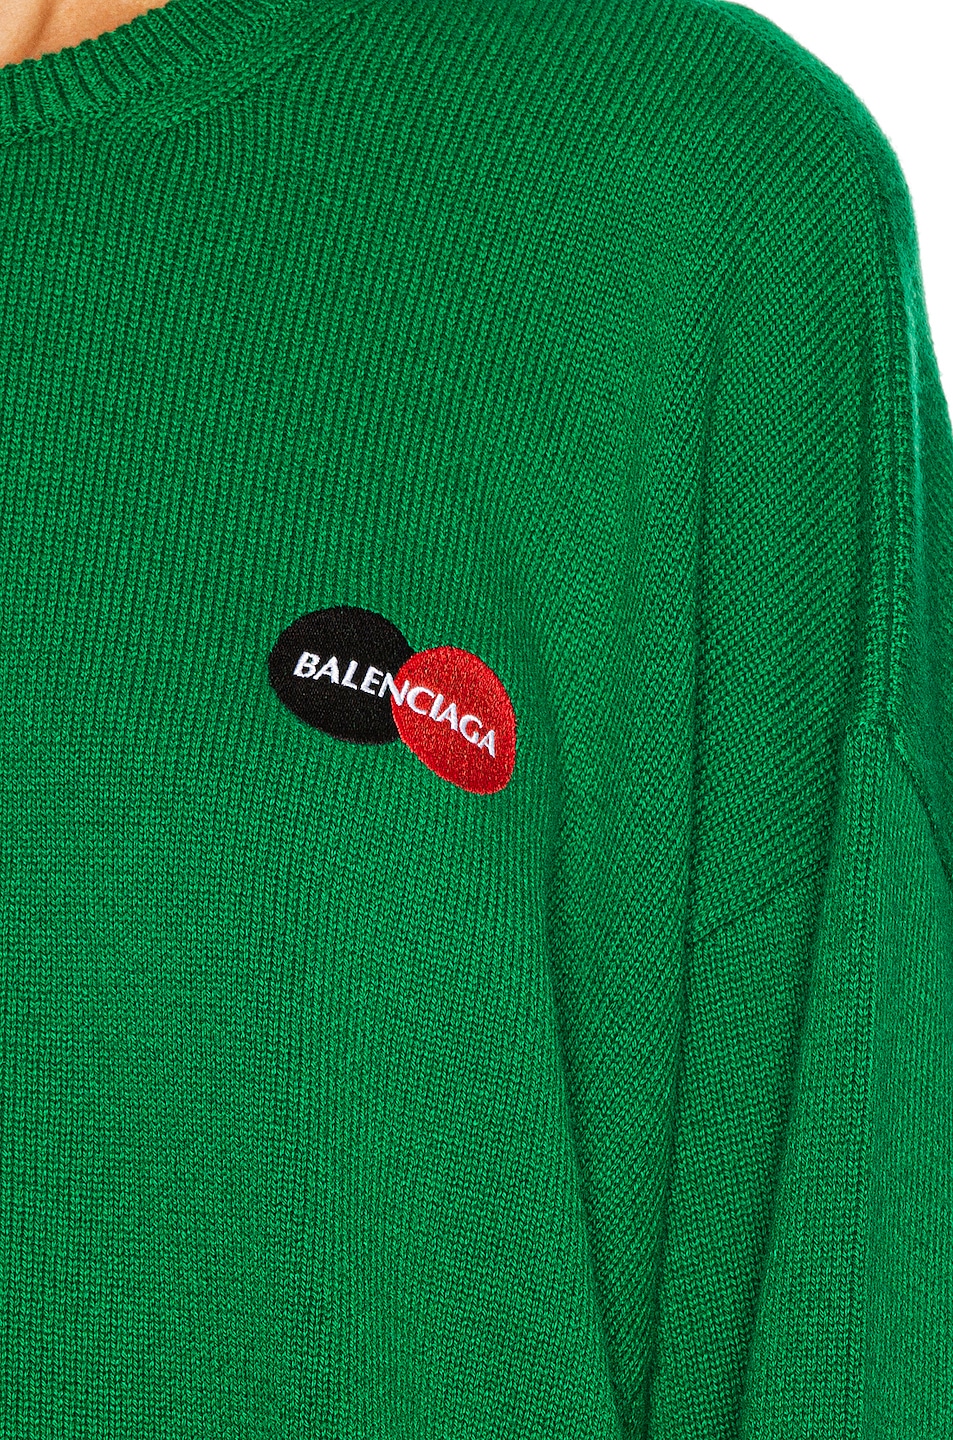 Balenciaga Long Sleeve Crew Neck Sweater in Green | FWRD